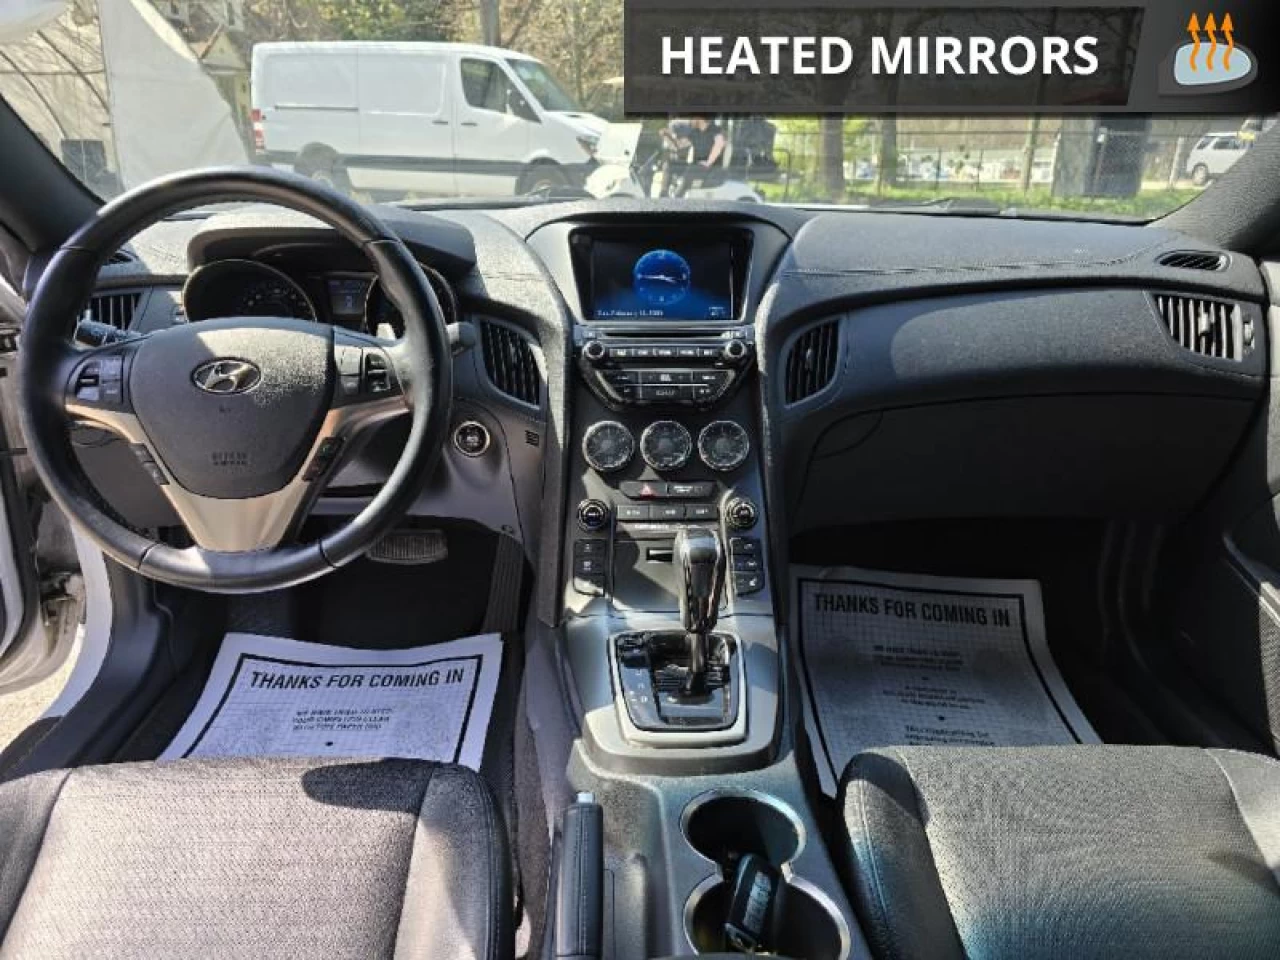 2016 Hyundai Genesis Coupe 3.8 Premium Main Image